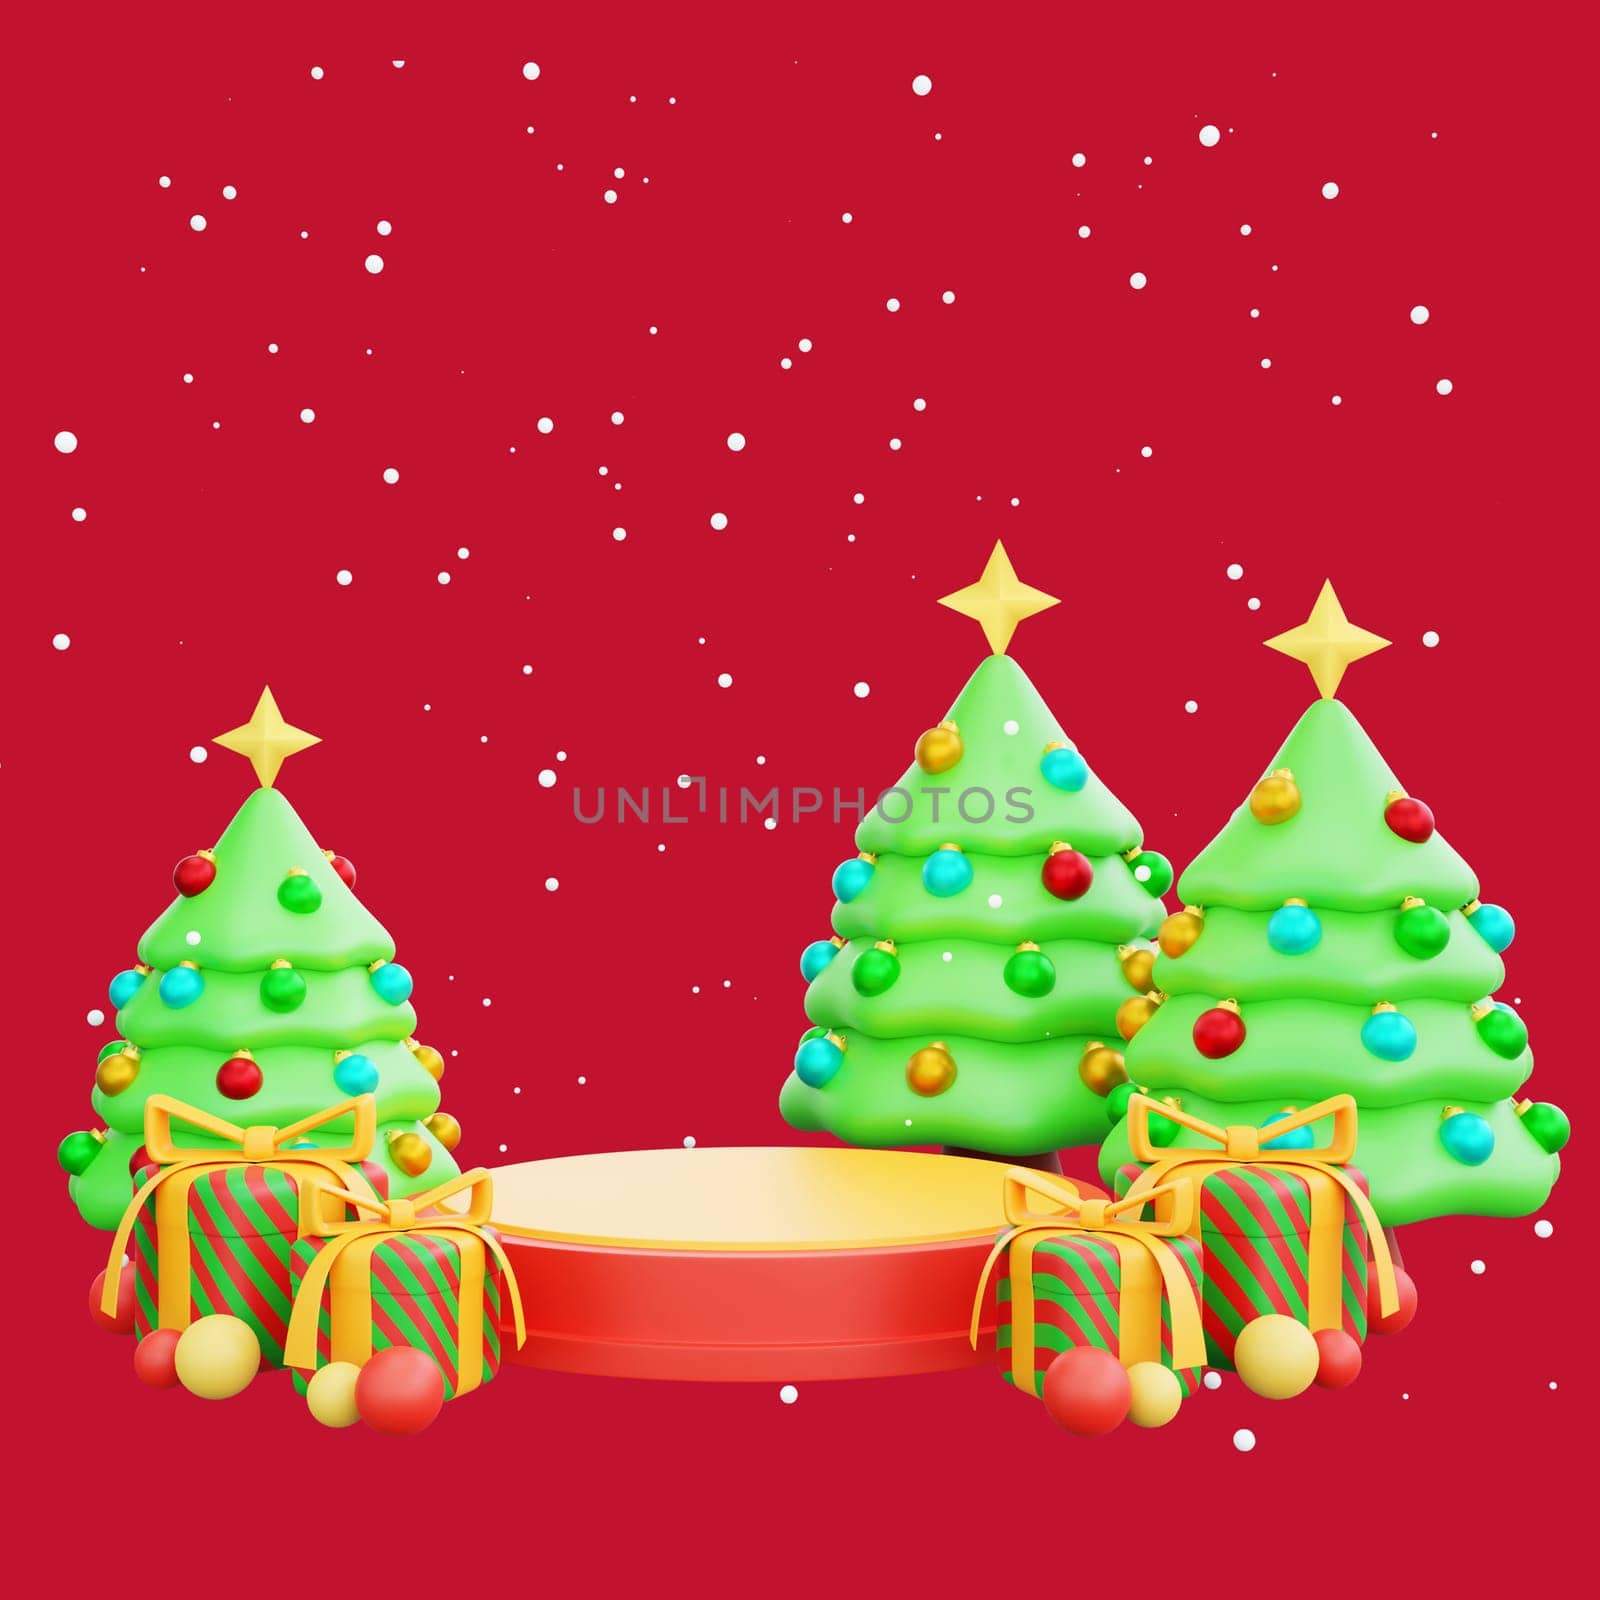 3D illustration of Christmas Trees Podium with Presents. Christmas decoration design by Rahmat_Djayusman